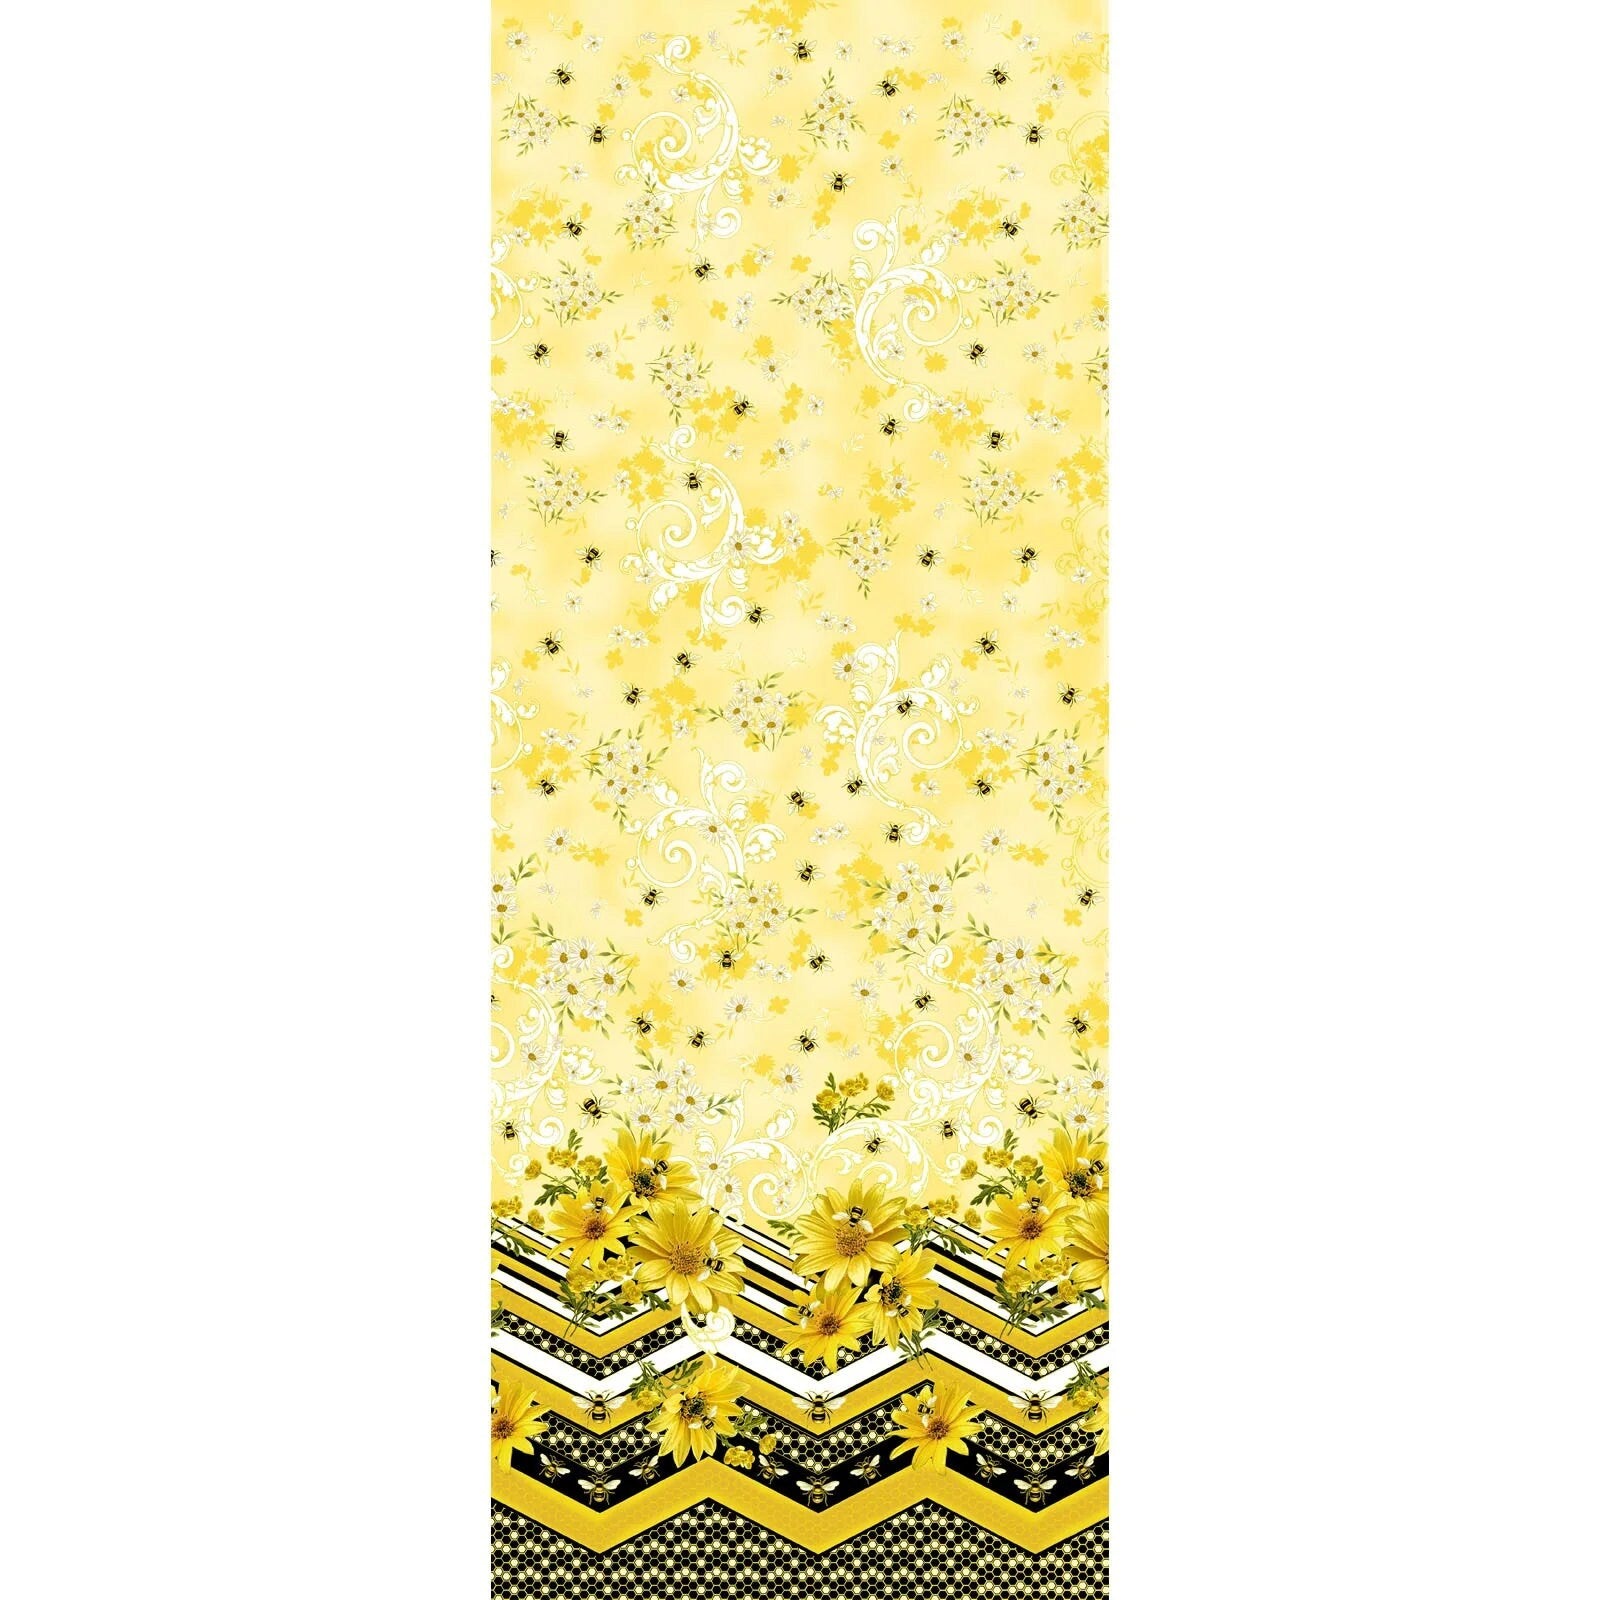 Buzzworthy Repeating Border Metallic Fabric - Benartex Kanvas 9973M-33, Yellow Floral Border Fabric By the Yard